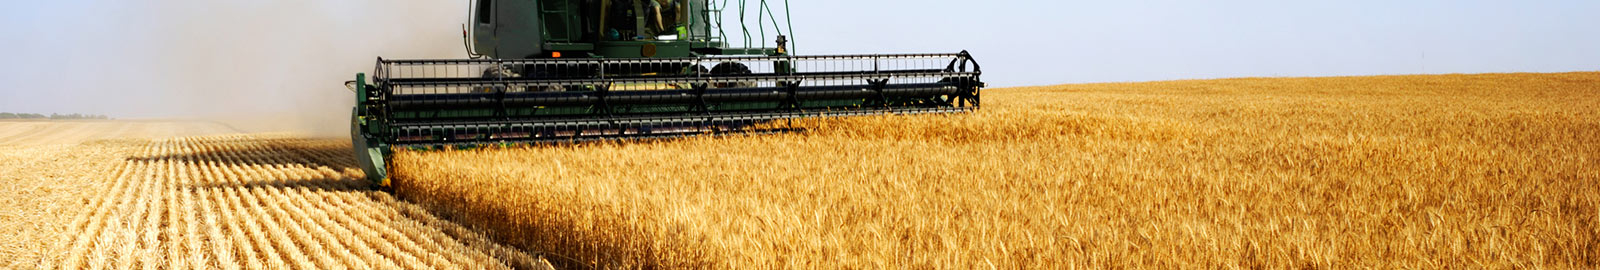 a combine harvesting crops